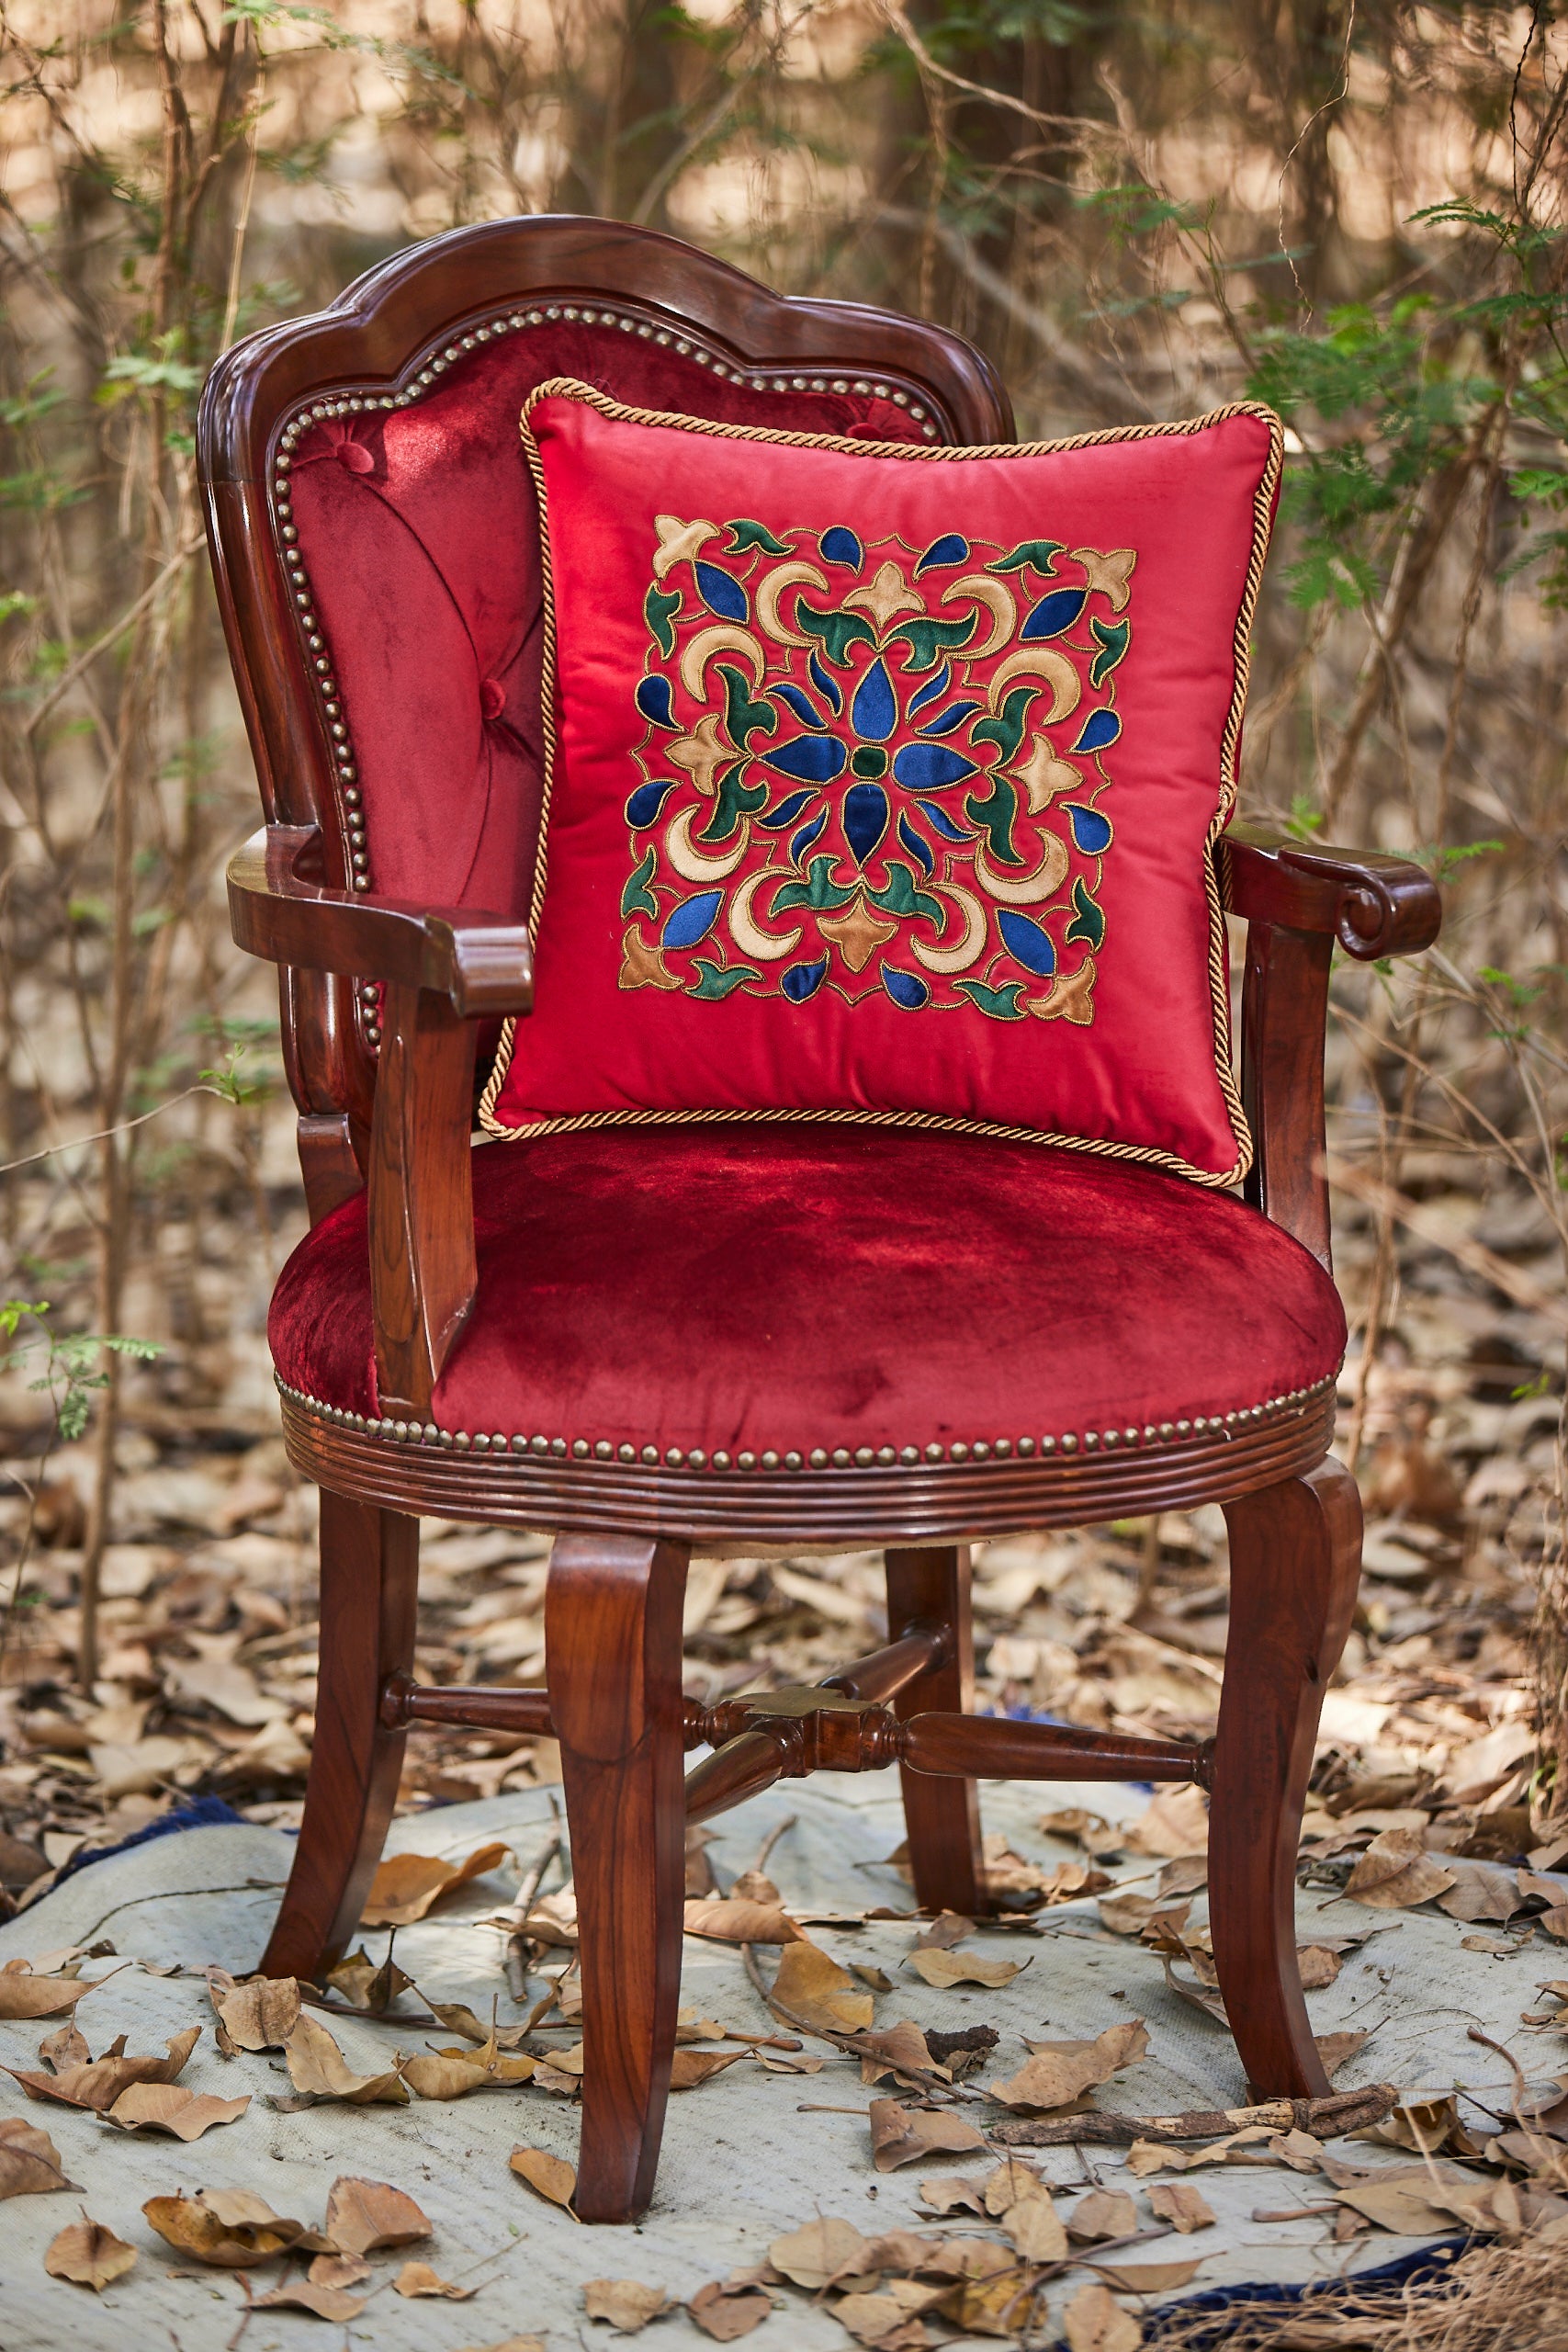 Moghul Embroidered Cushion